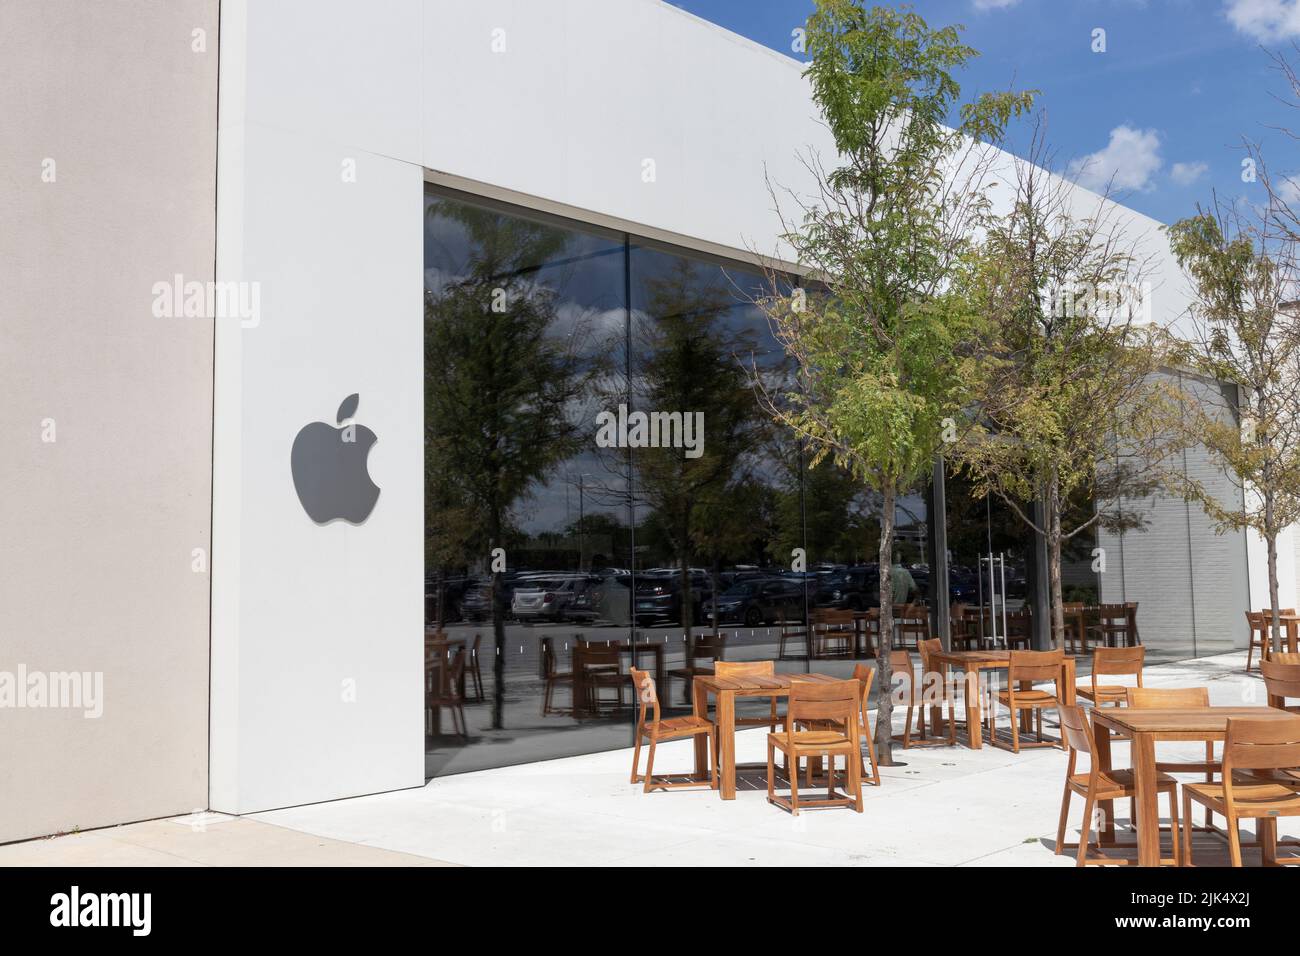 Indianapolis - Circa Juli 2022: Apple Store Retail Mall Location. Apple verkauft und beliefert iPhones, iPads, iMacs und Macintosh-Computer. Stockfoto